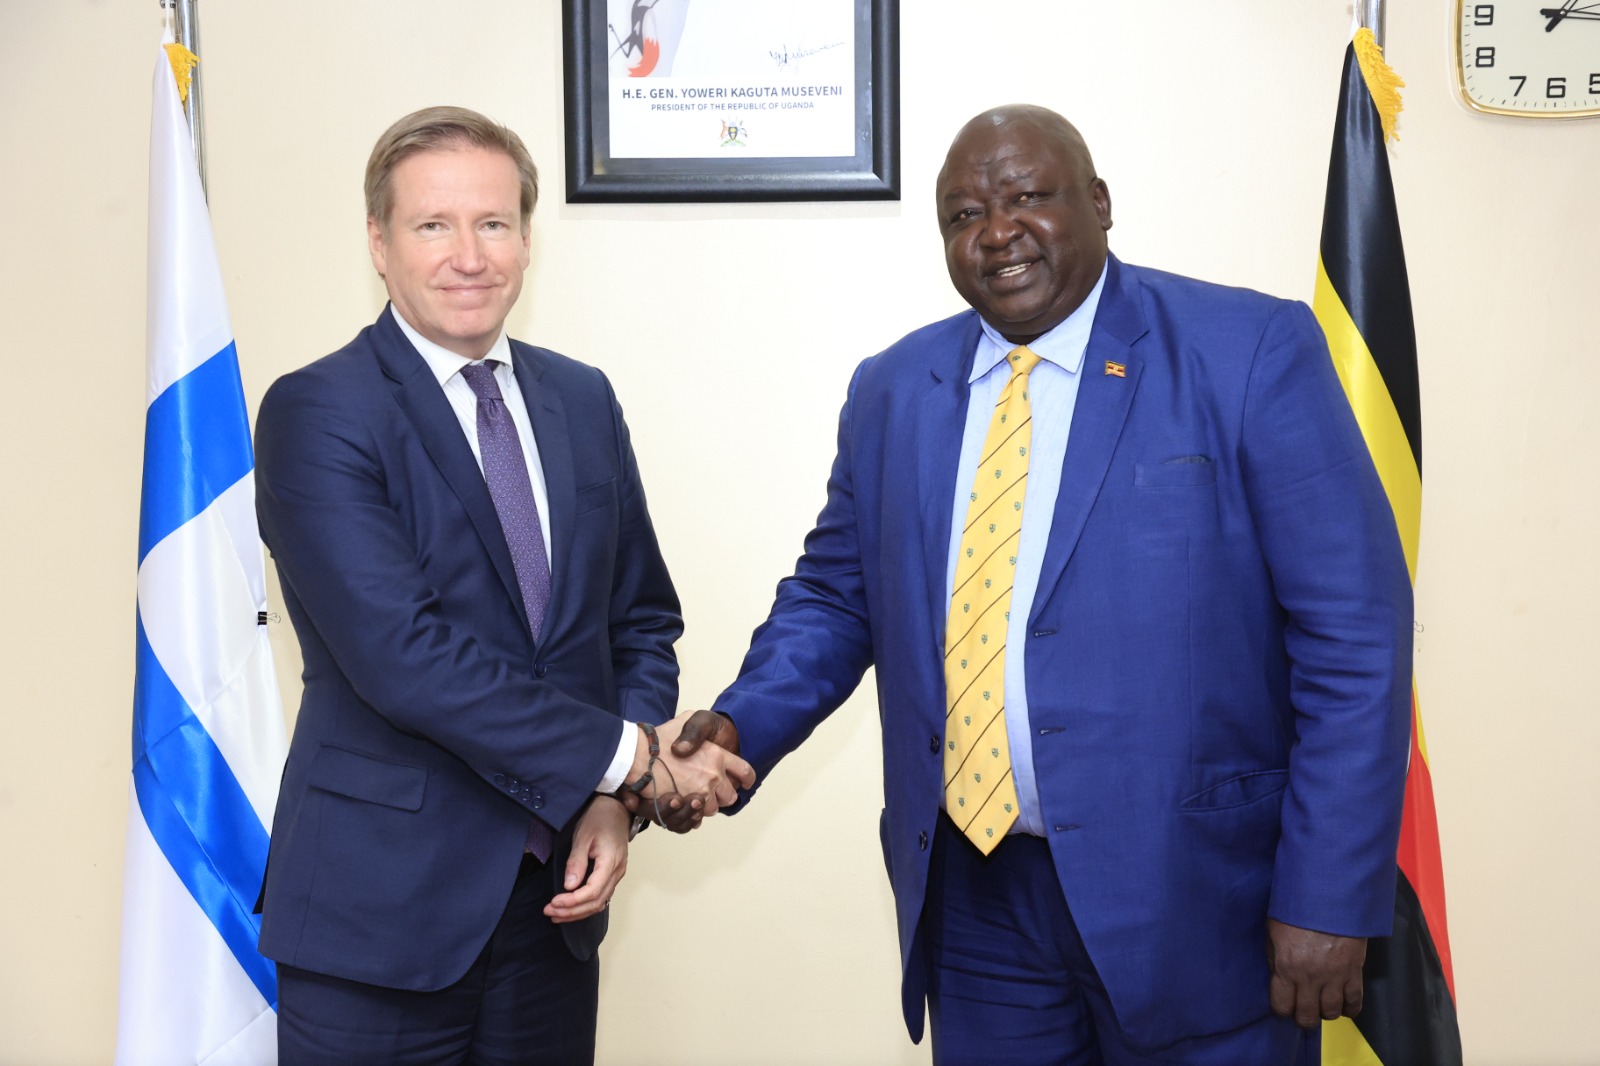 Uganda keen on bolstering trade ties with Finland